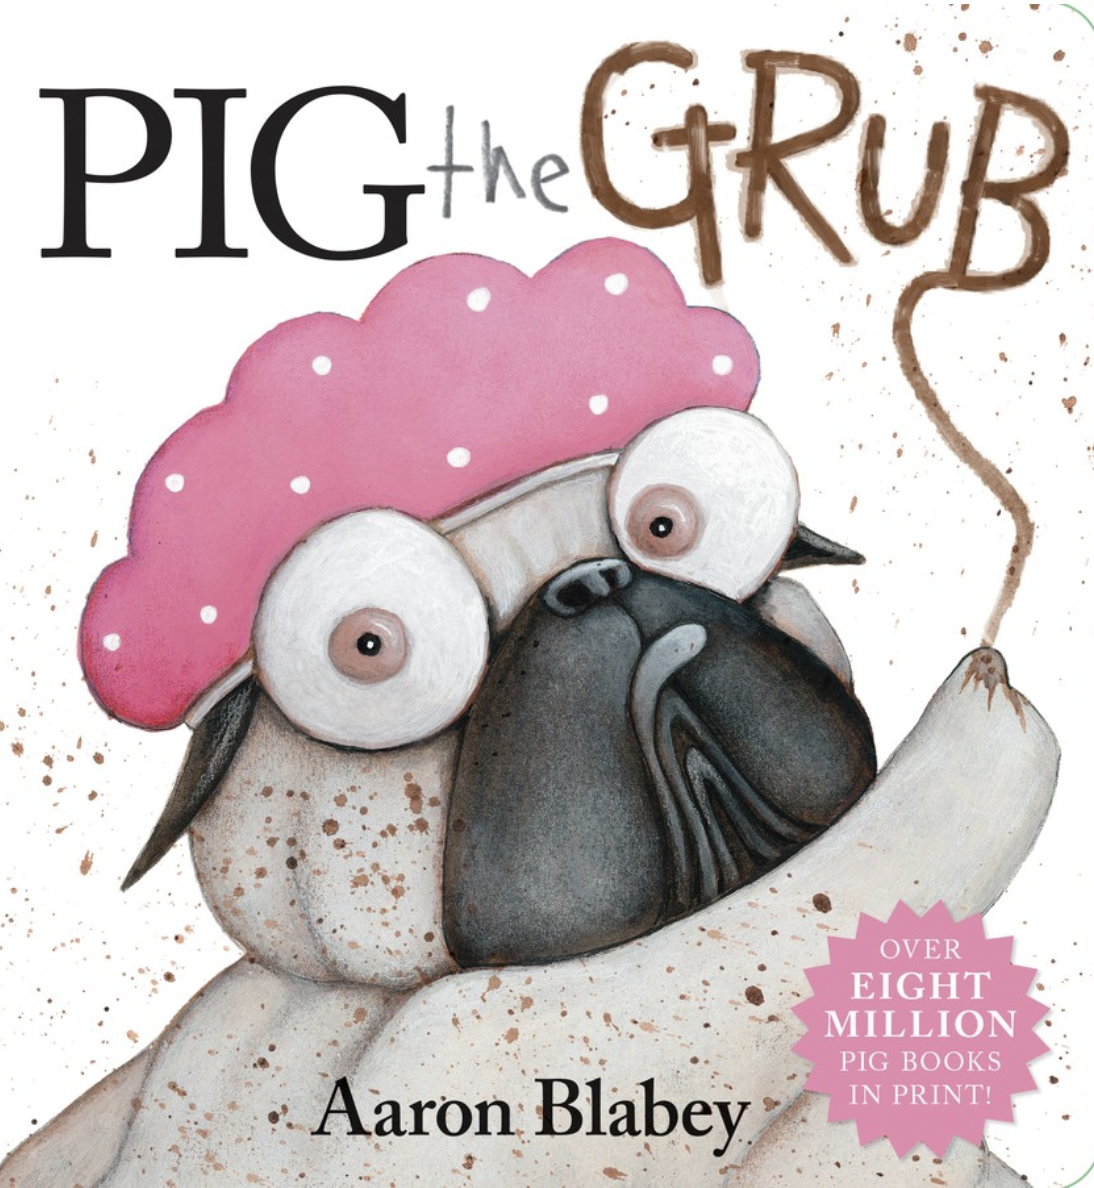 Pig the Grub by Aaron Blabey